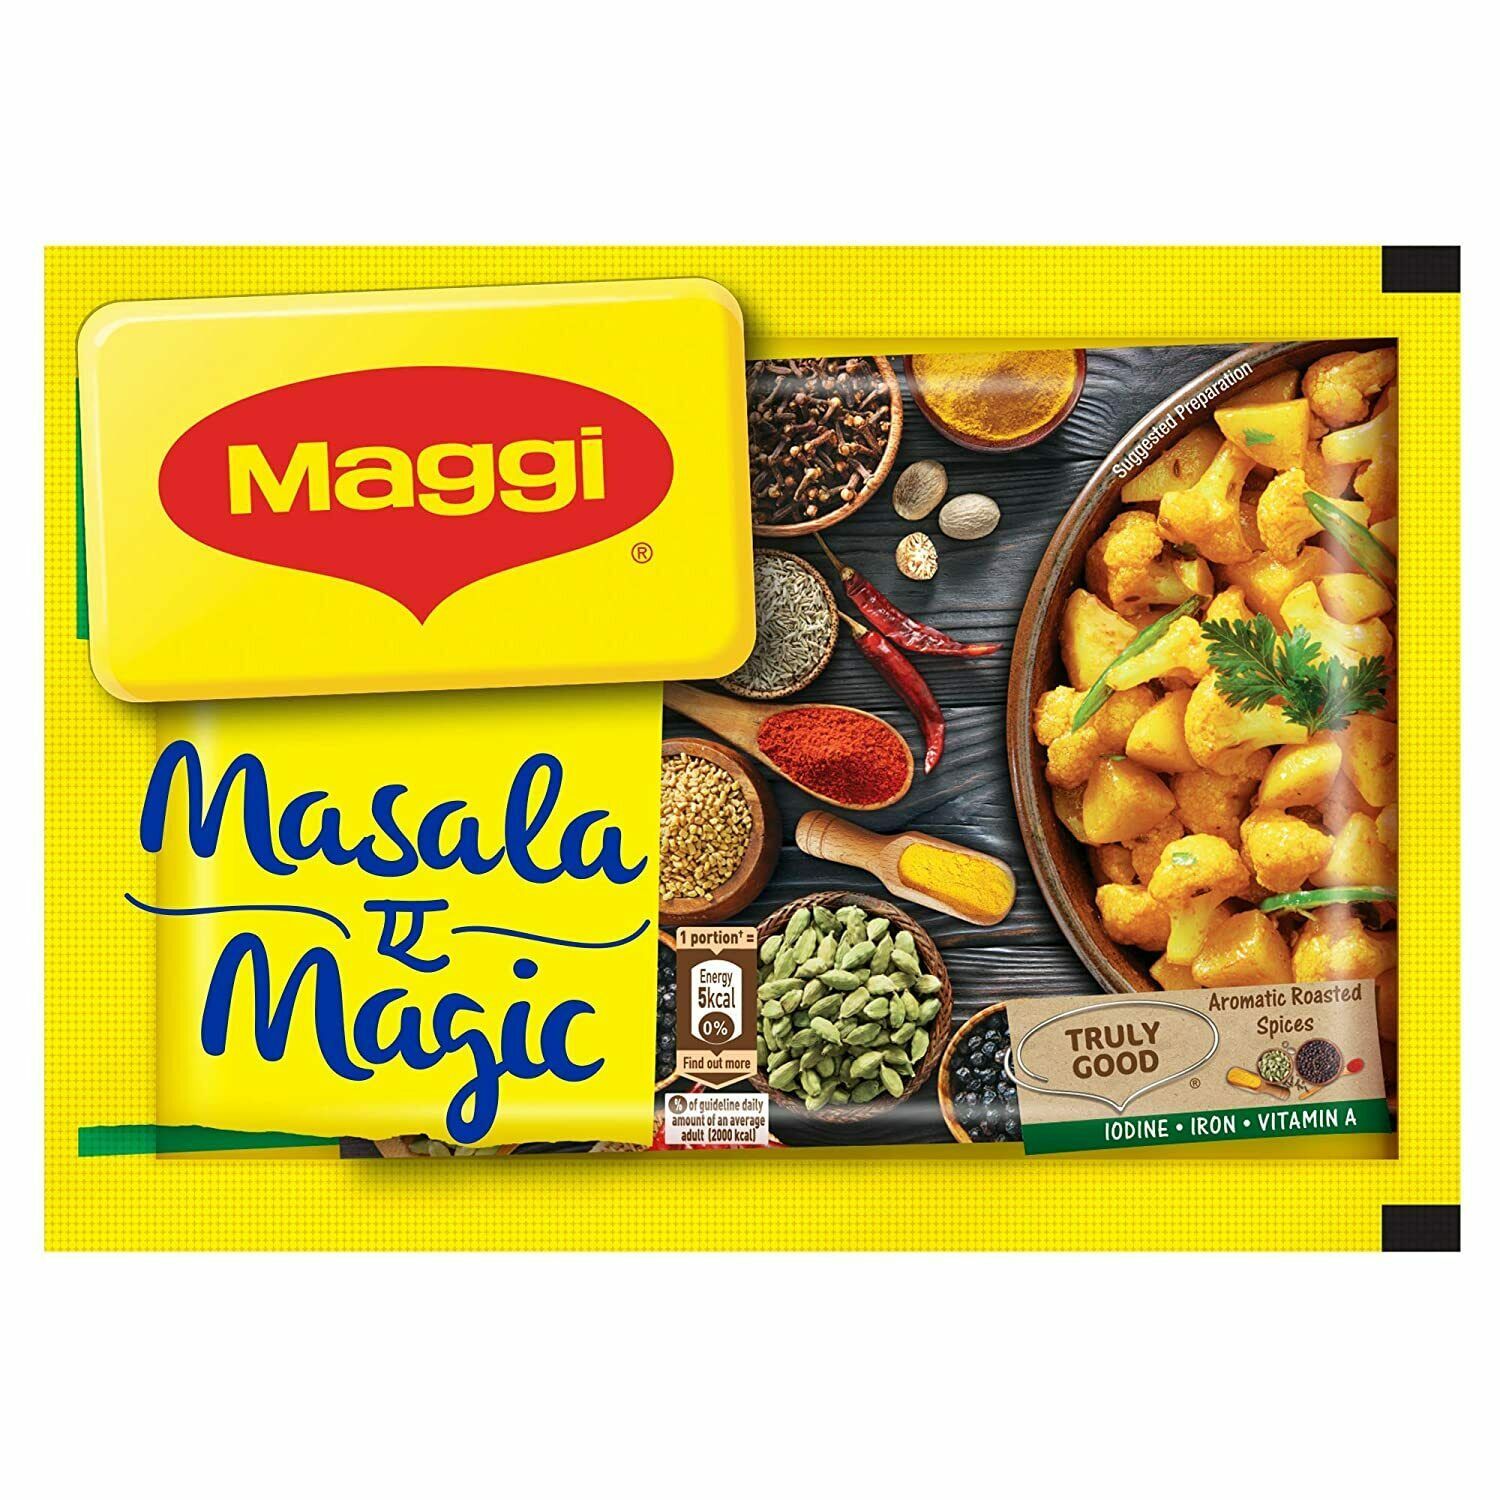 Primary image for 6x Maggi Masala ae Magic Sachet 6 gram pack Taste Enhancer Indian Food Seasoning